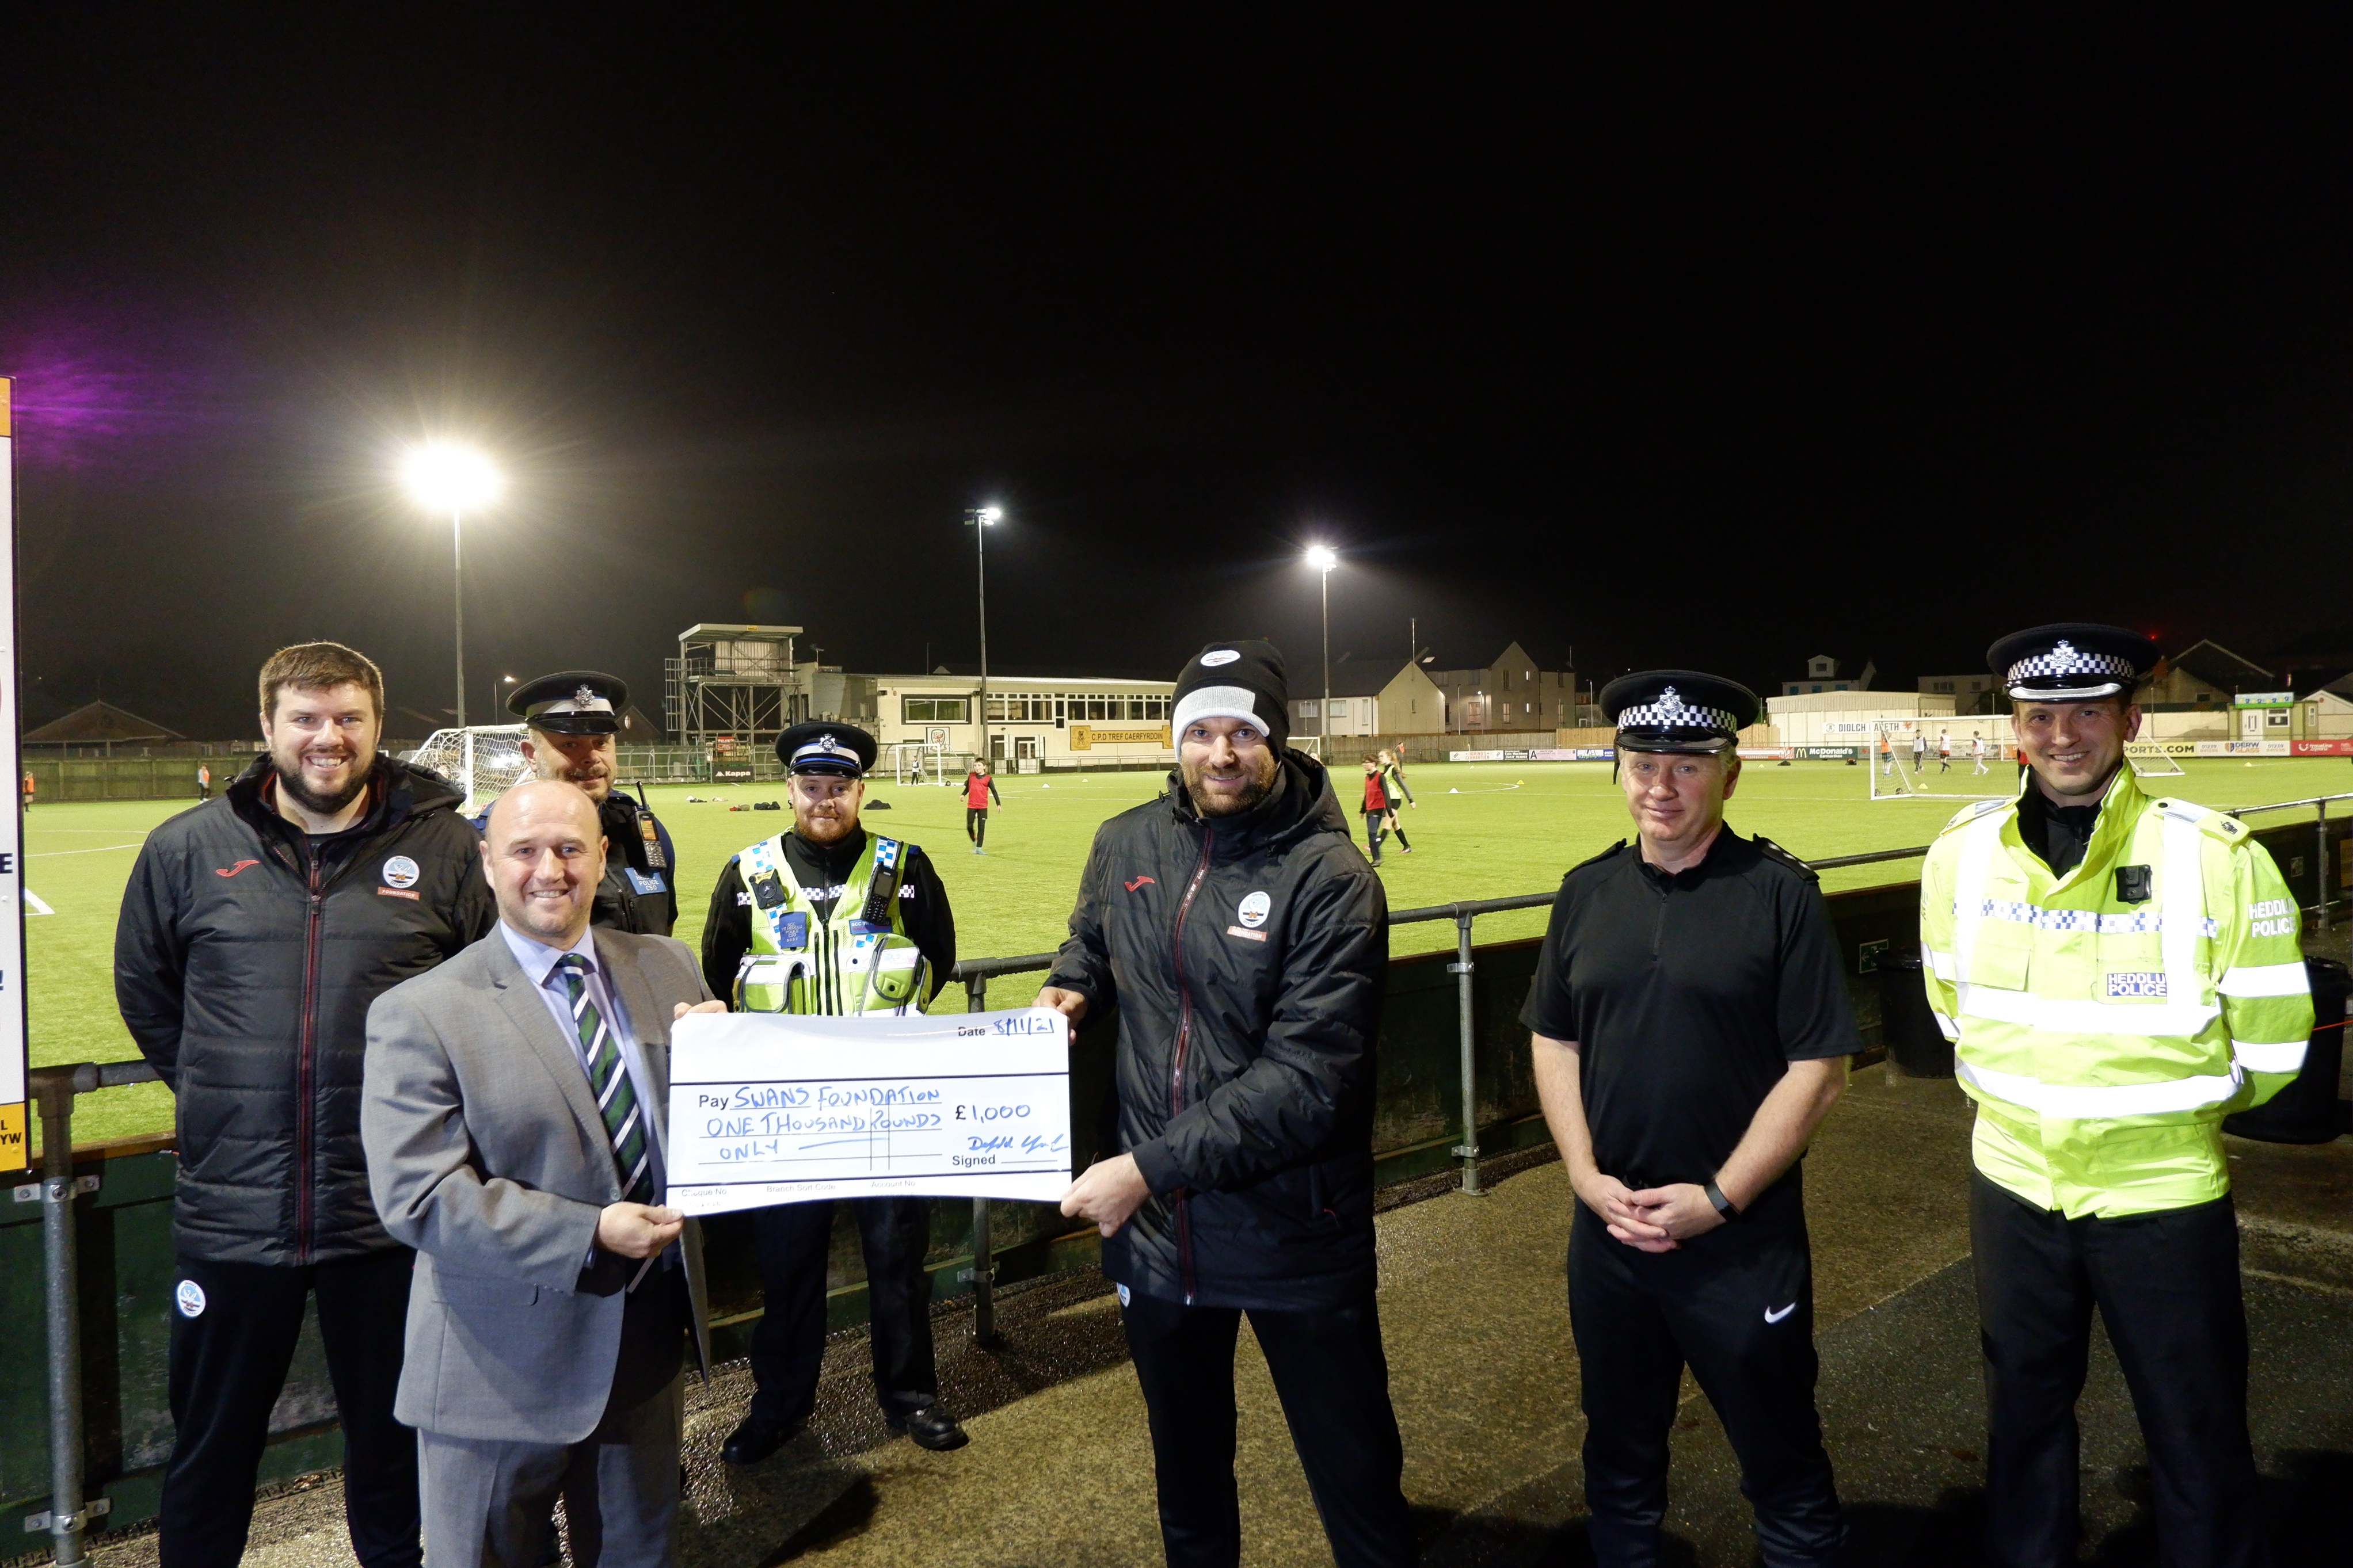 PCC Dafydd Llywelyn and Dyfed-Powys Police Officers present donation to Swansea City AFC Foundation on behalf of Force Charity Diogel